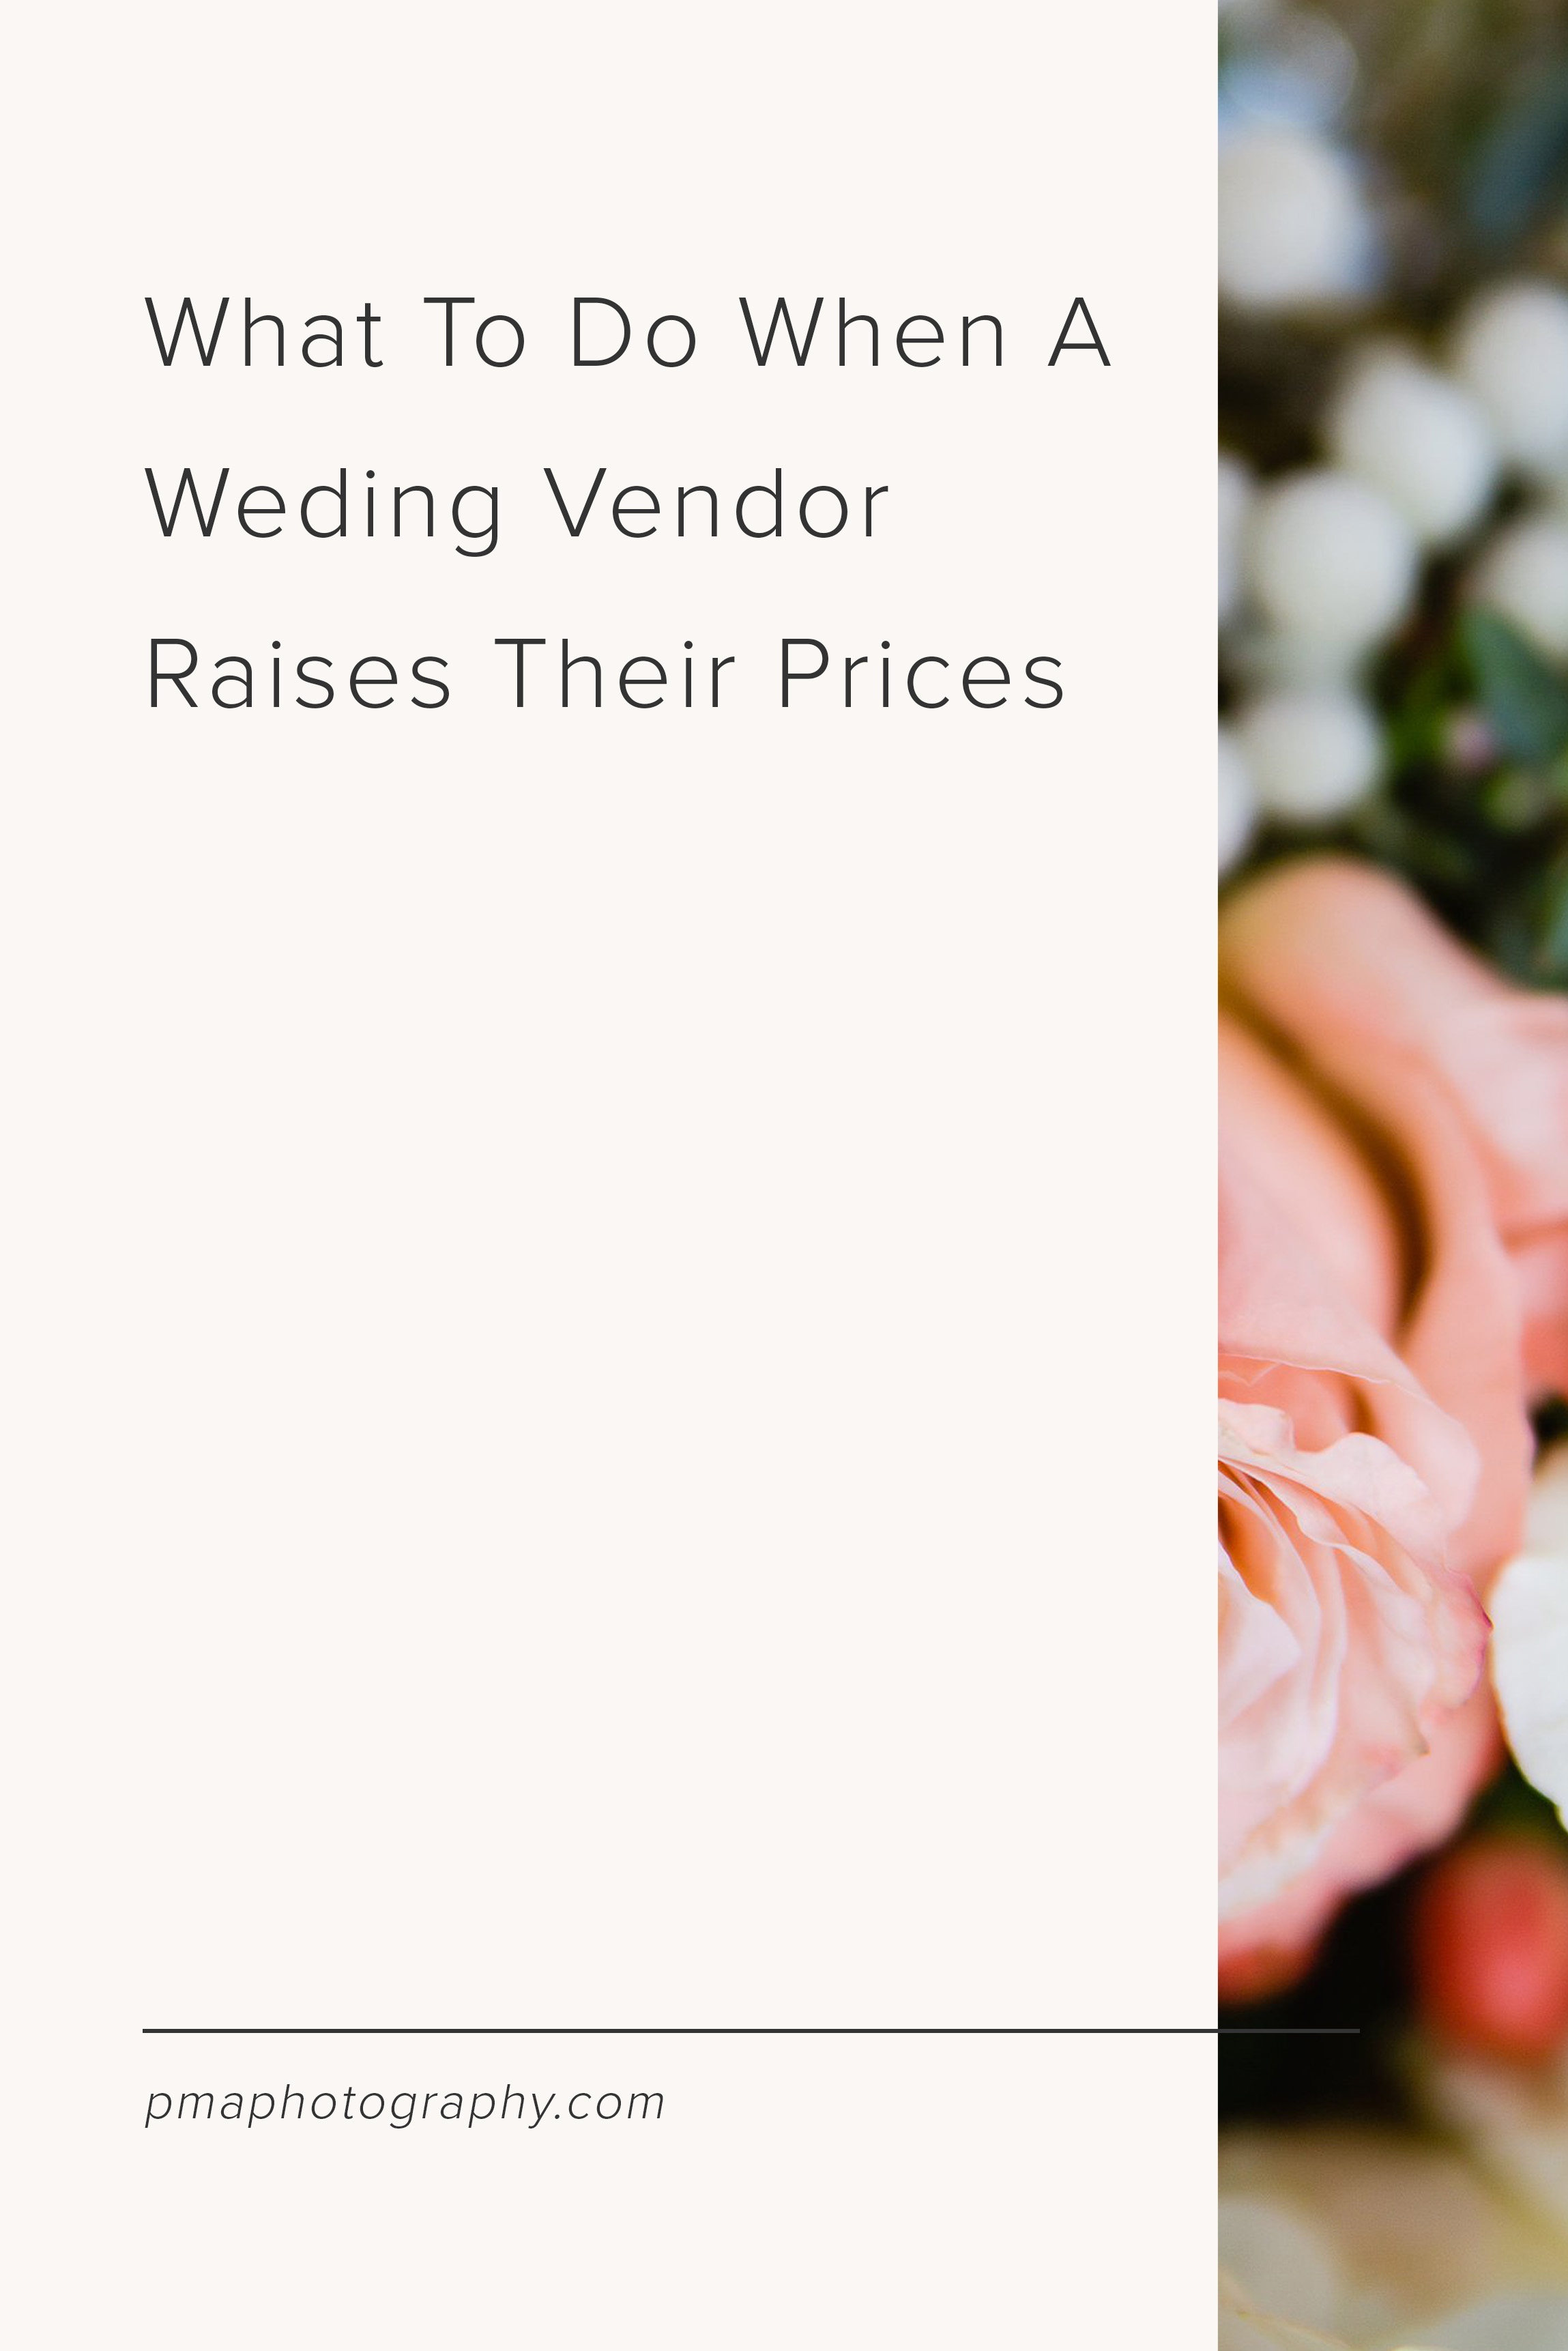 What to do when a wedding vendor raises their prices.